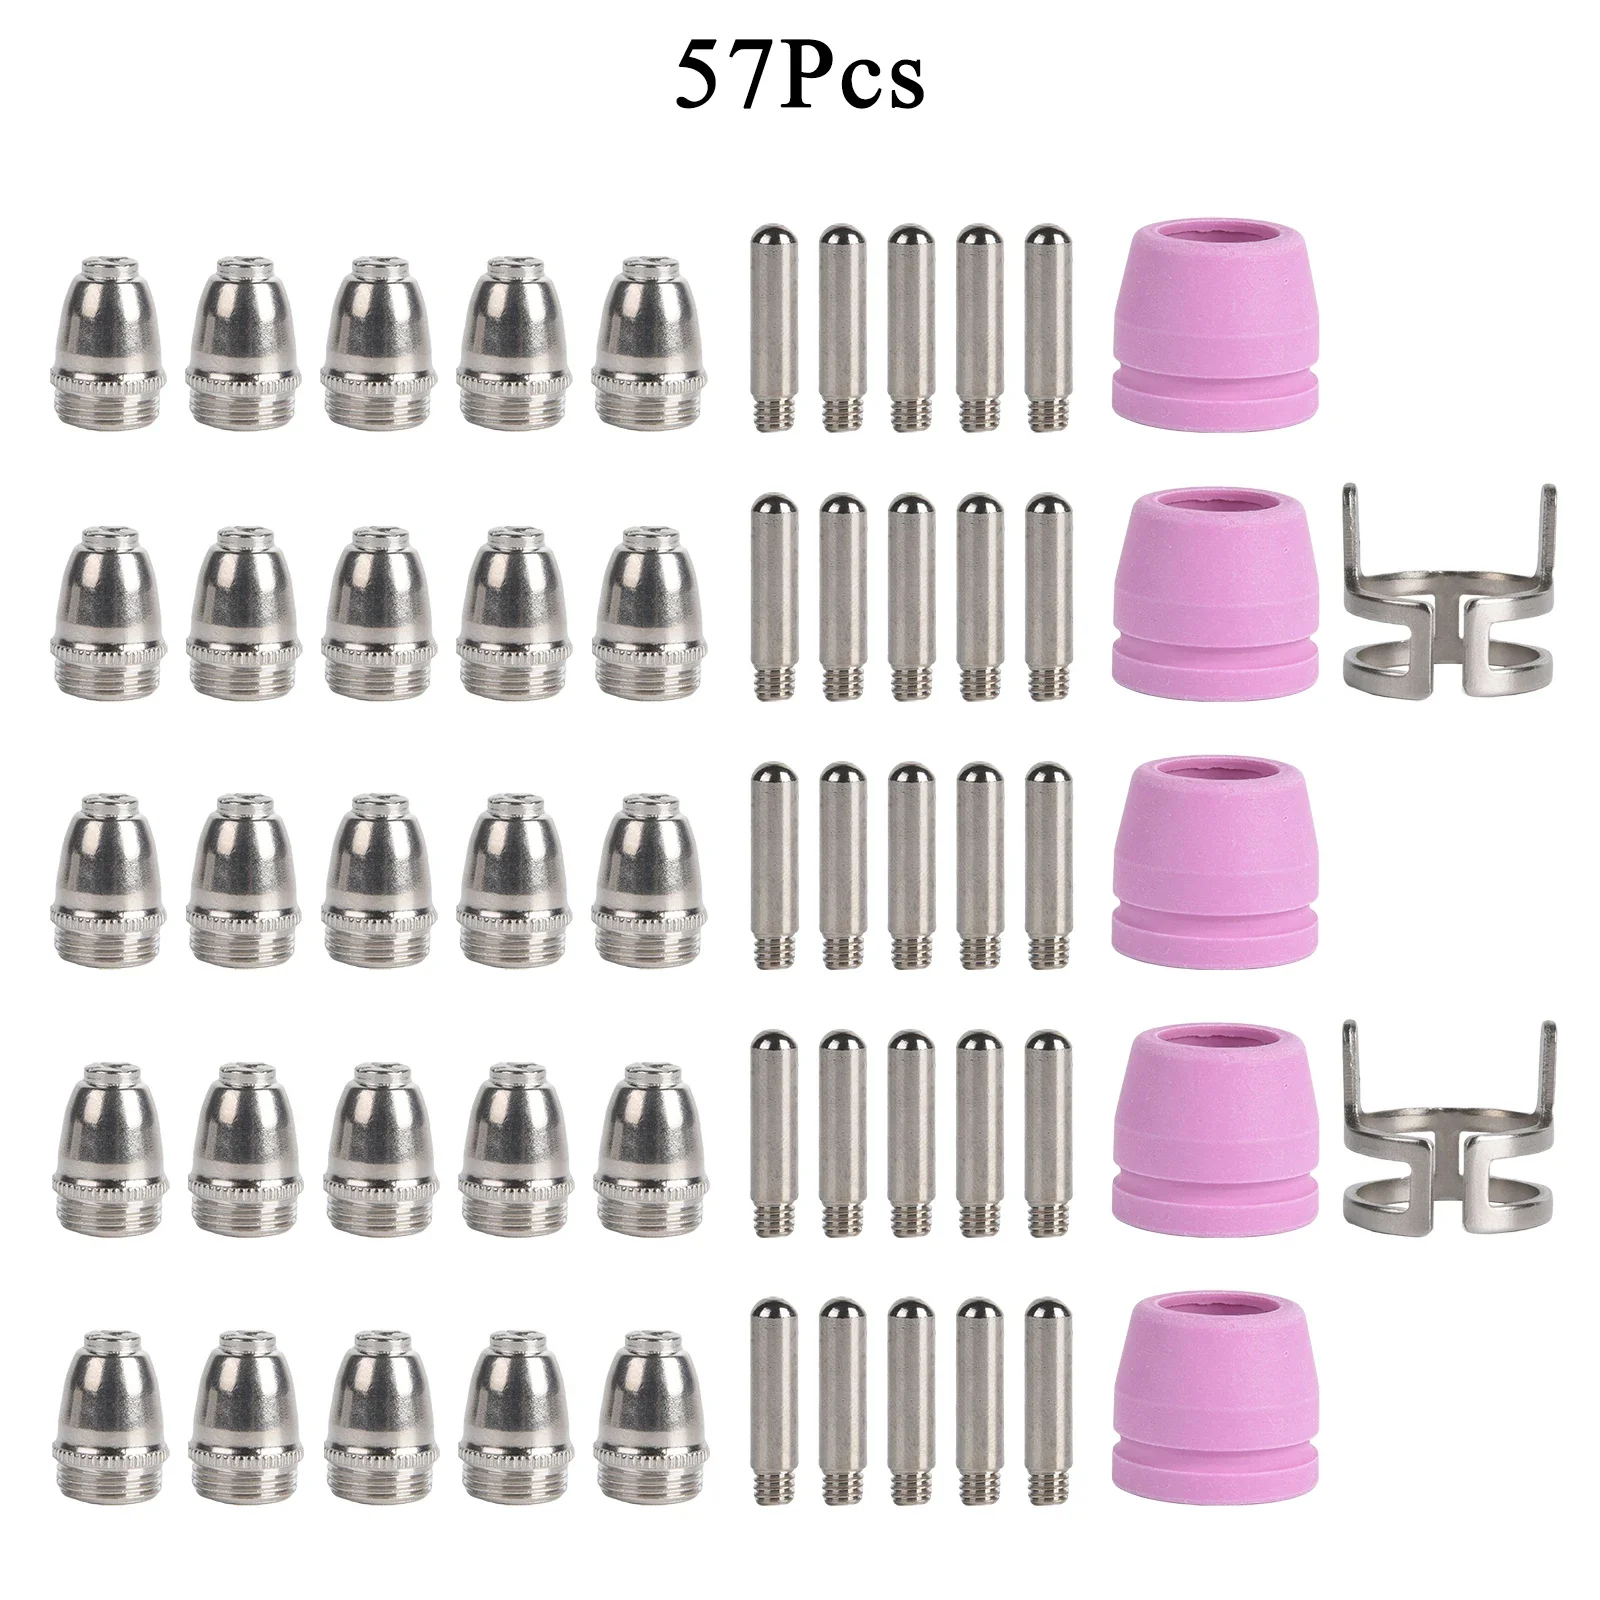 

57Pcs Plasma Cutter Torch Consumables Nozzles Tips Kit Fit SG-55 AG-60 40/50/78 Amp